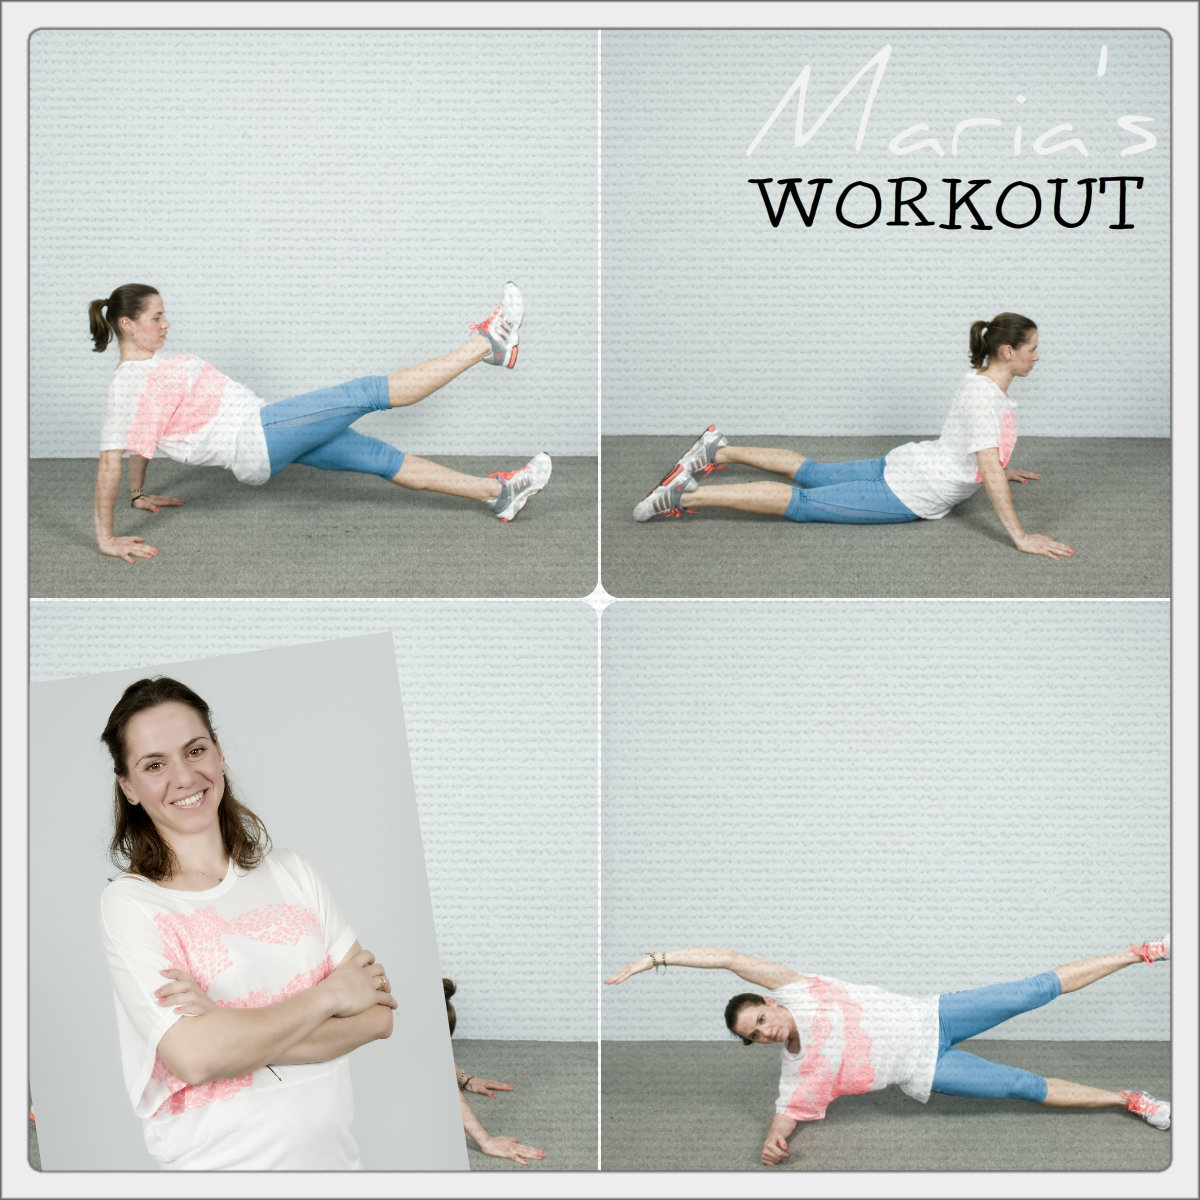 1 | LIKE A PRO! Η Μαρία Τσιαρτσιάνη σου δείχνει τις βασικές ασκήσεις Pilates για τέλειο σώμα